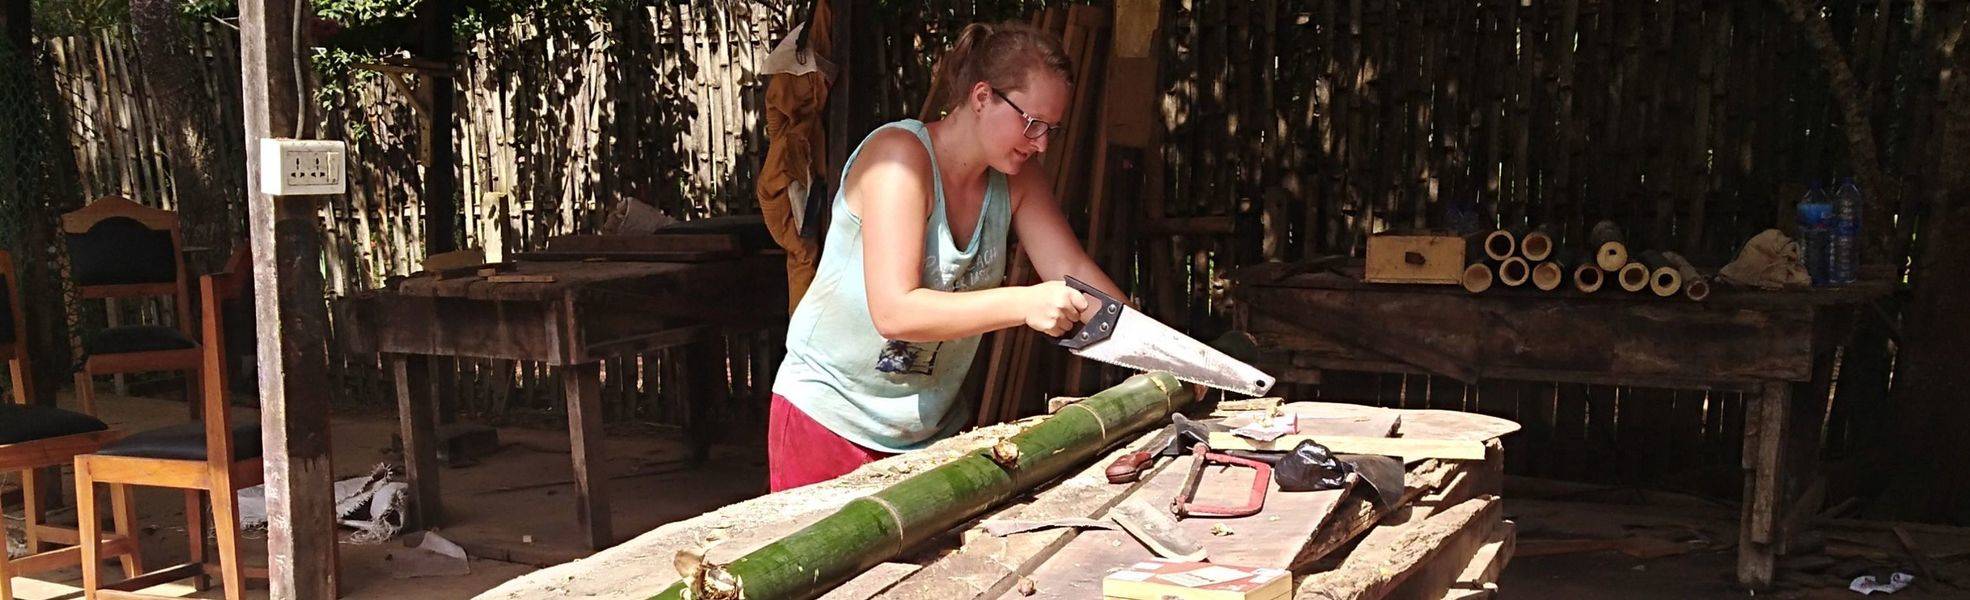 Volunteer at her voluntary work as a carpenter